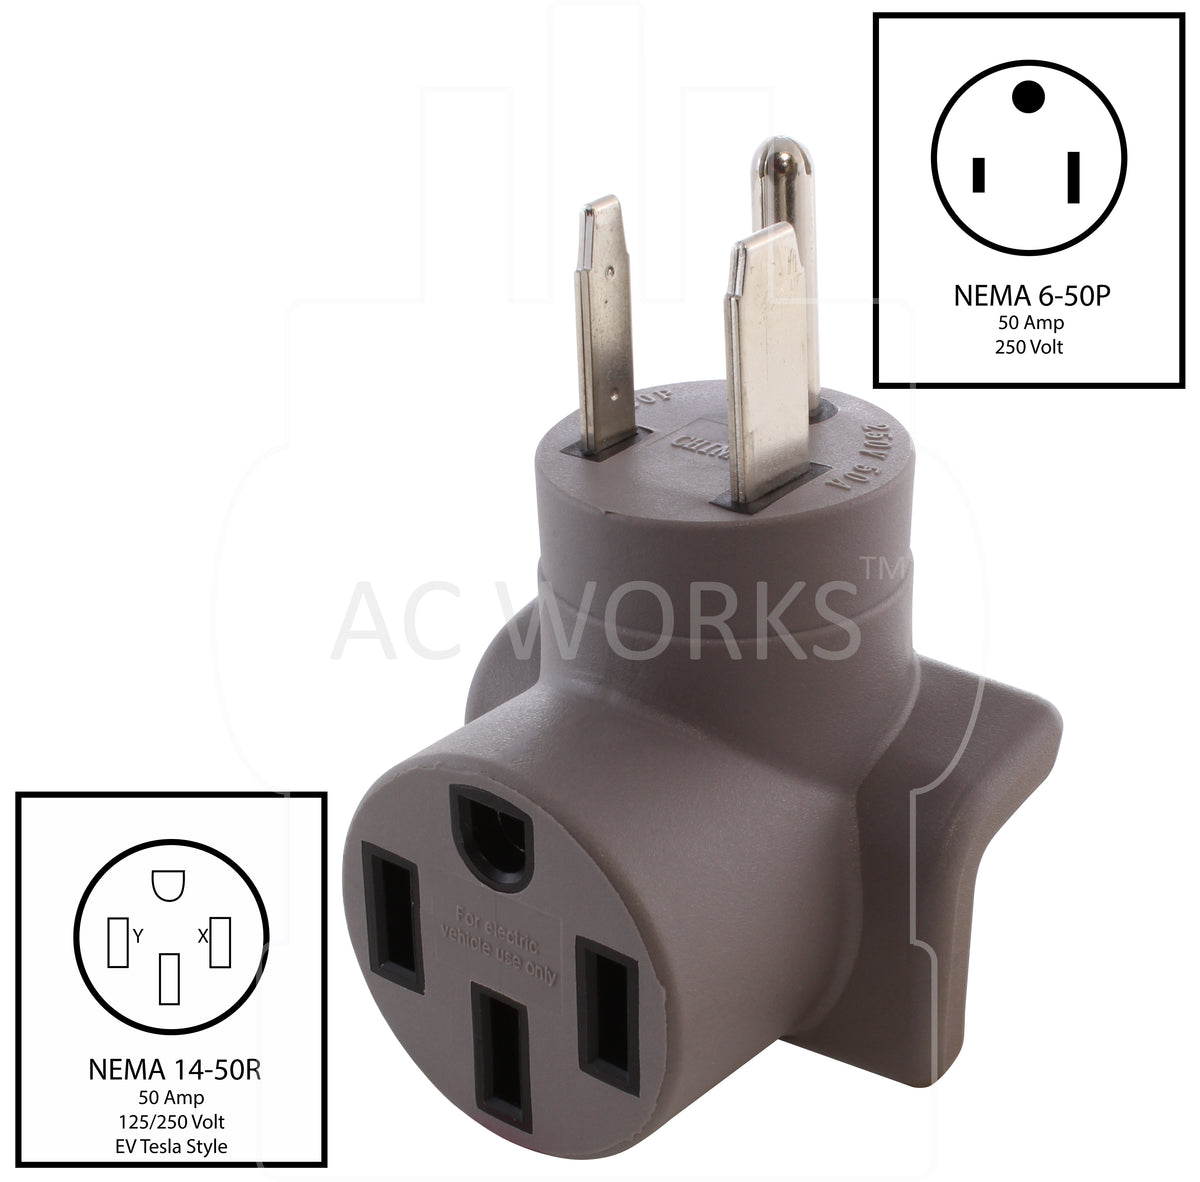 AC WORKS® EV Charging Adapter NEMA 6-50P to 50-Amp Tesla – AC